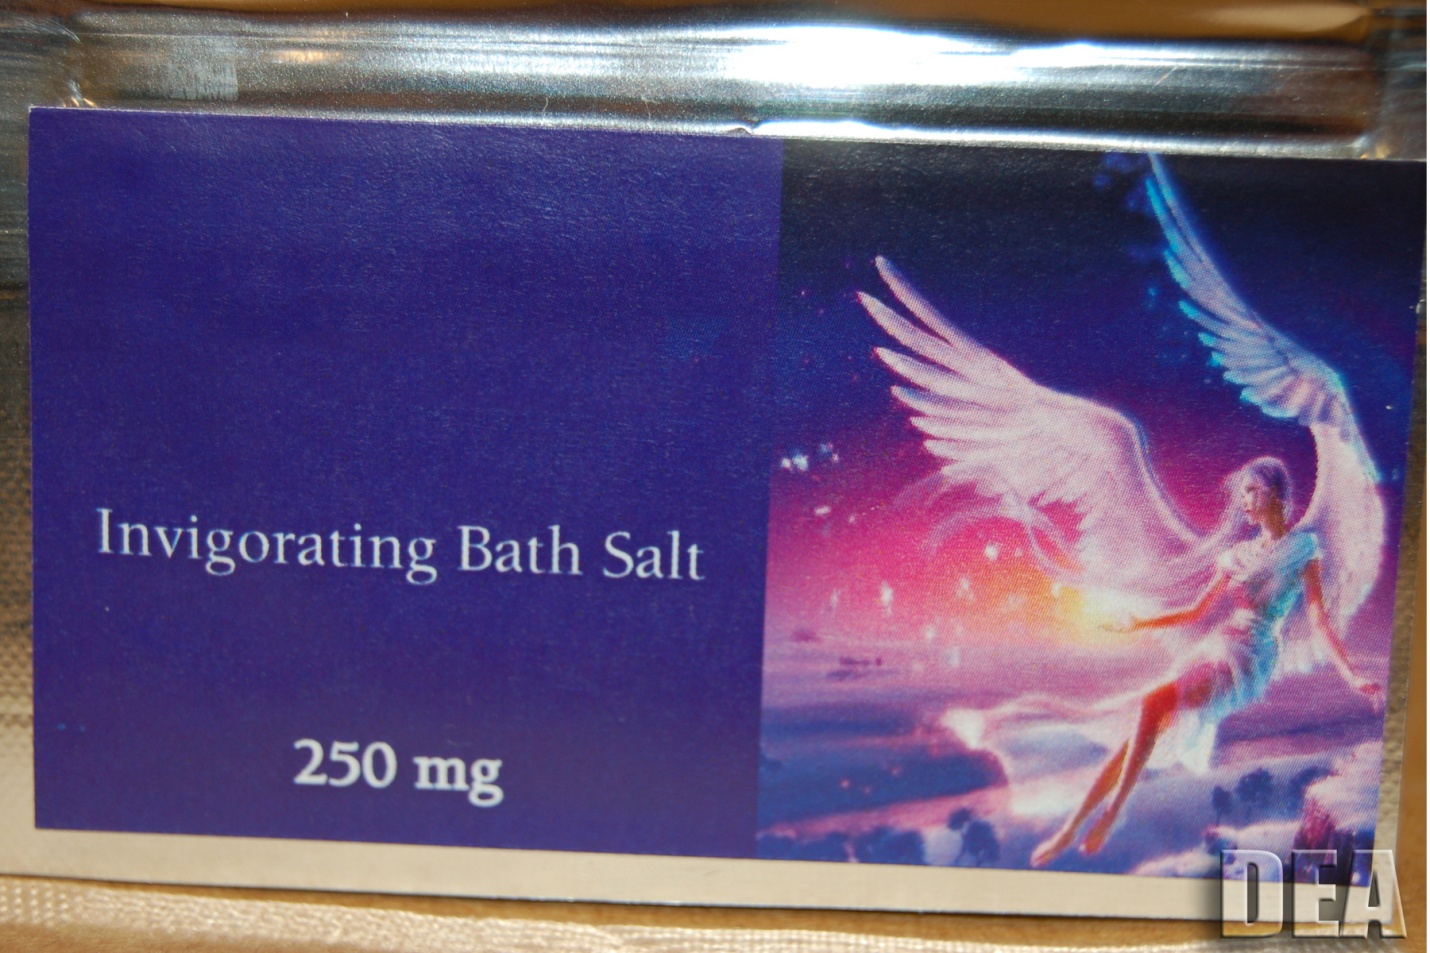 http://www.ct.gov/dcp/lib/dcp/drug_control/images/bath_salt2.jpg